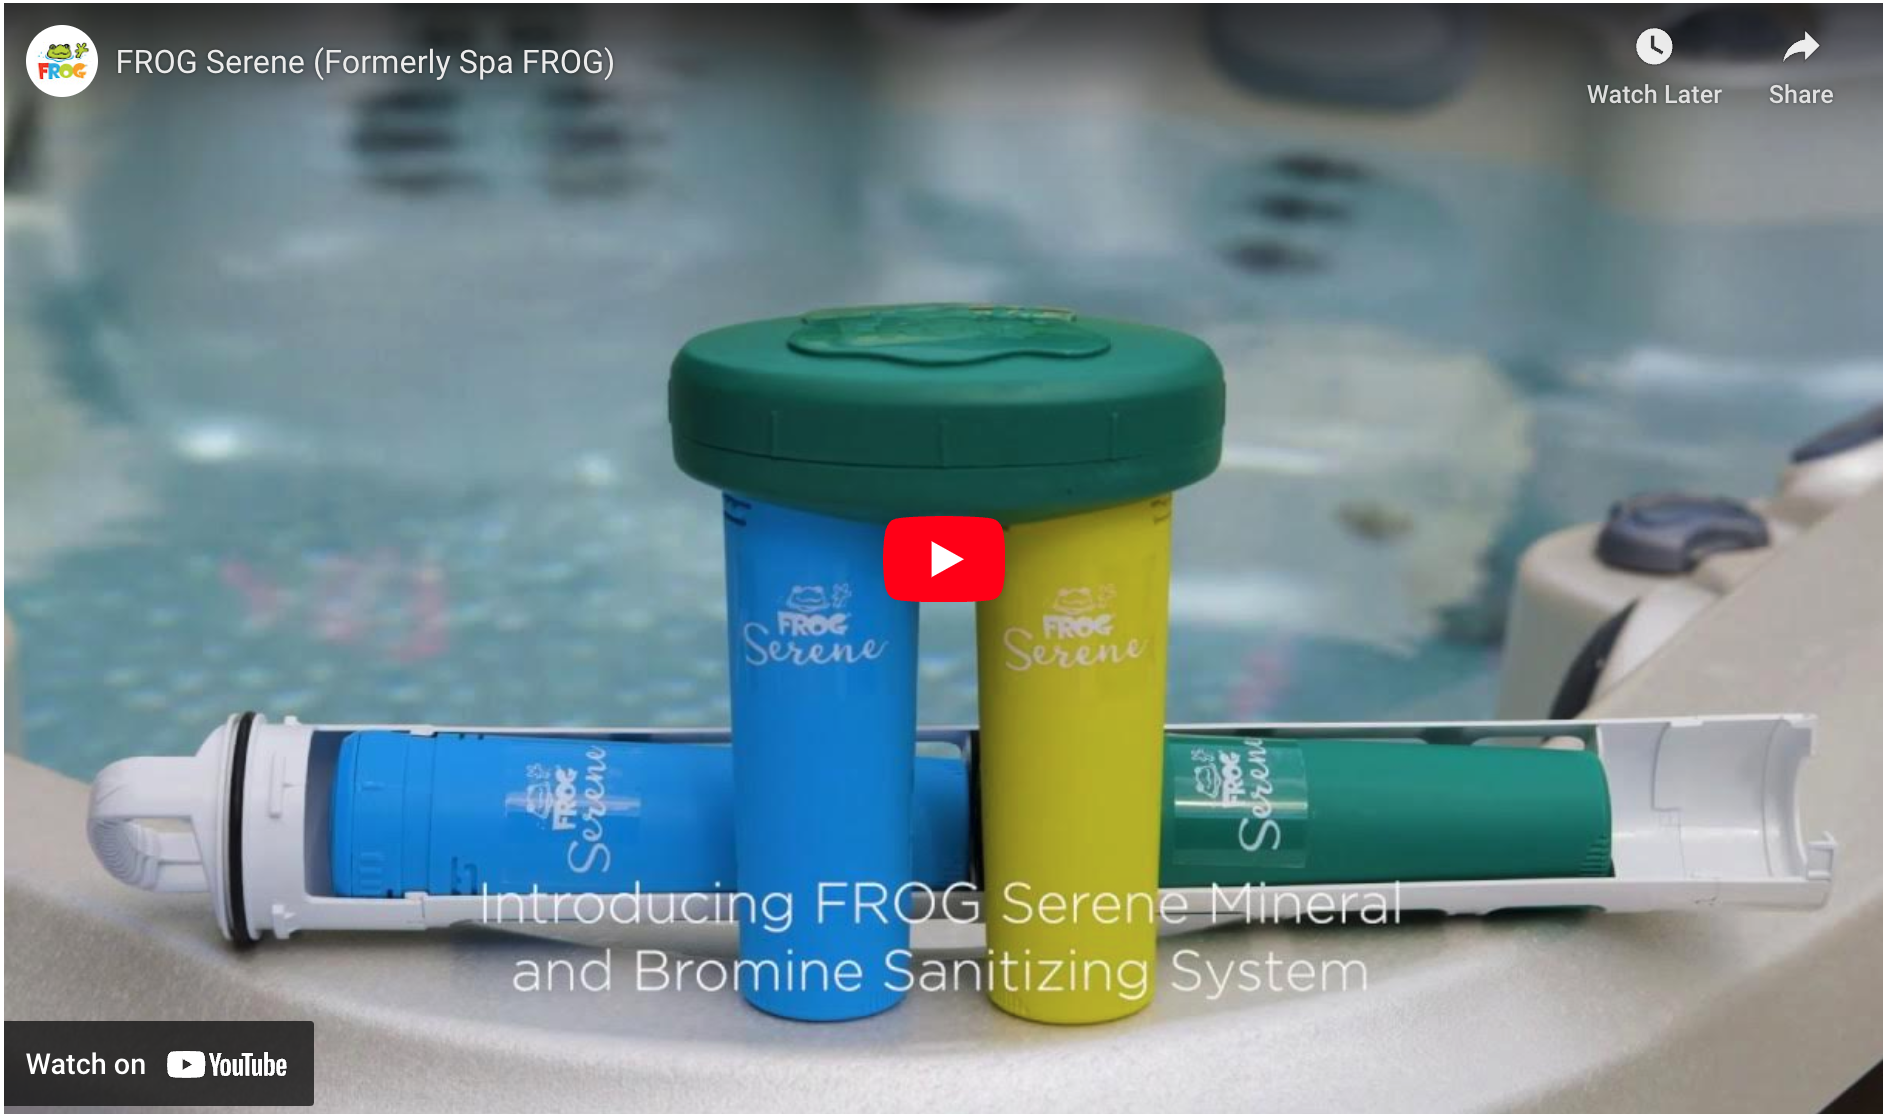 FROG Serene (Formerly Spa FROG) Mineral & Bromine Sanitizing System